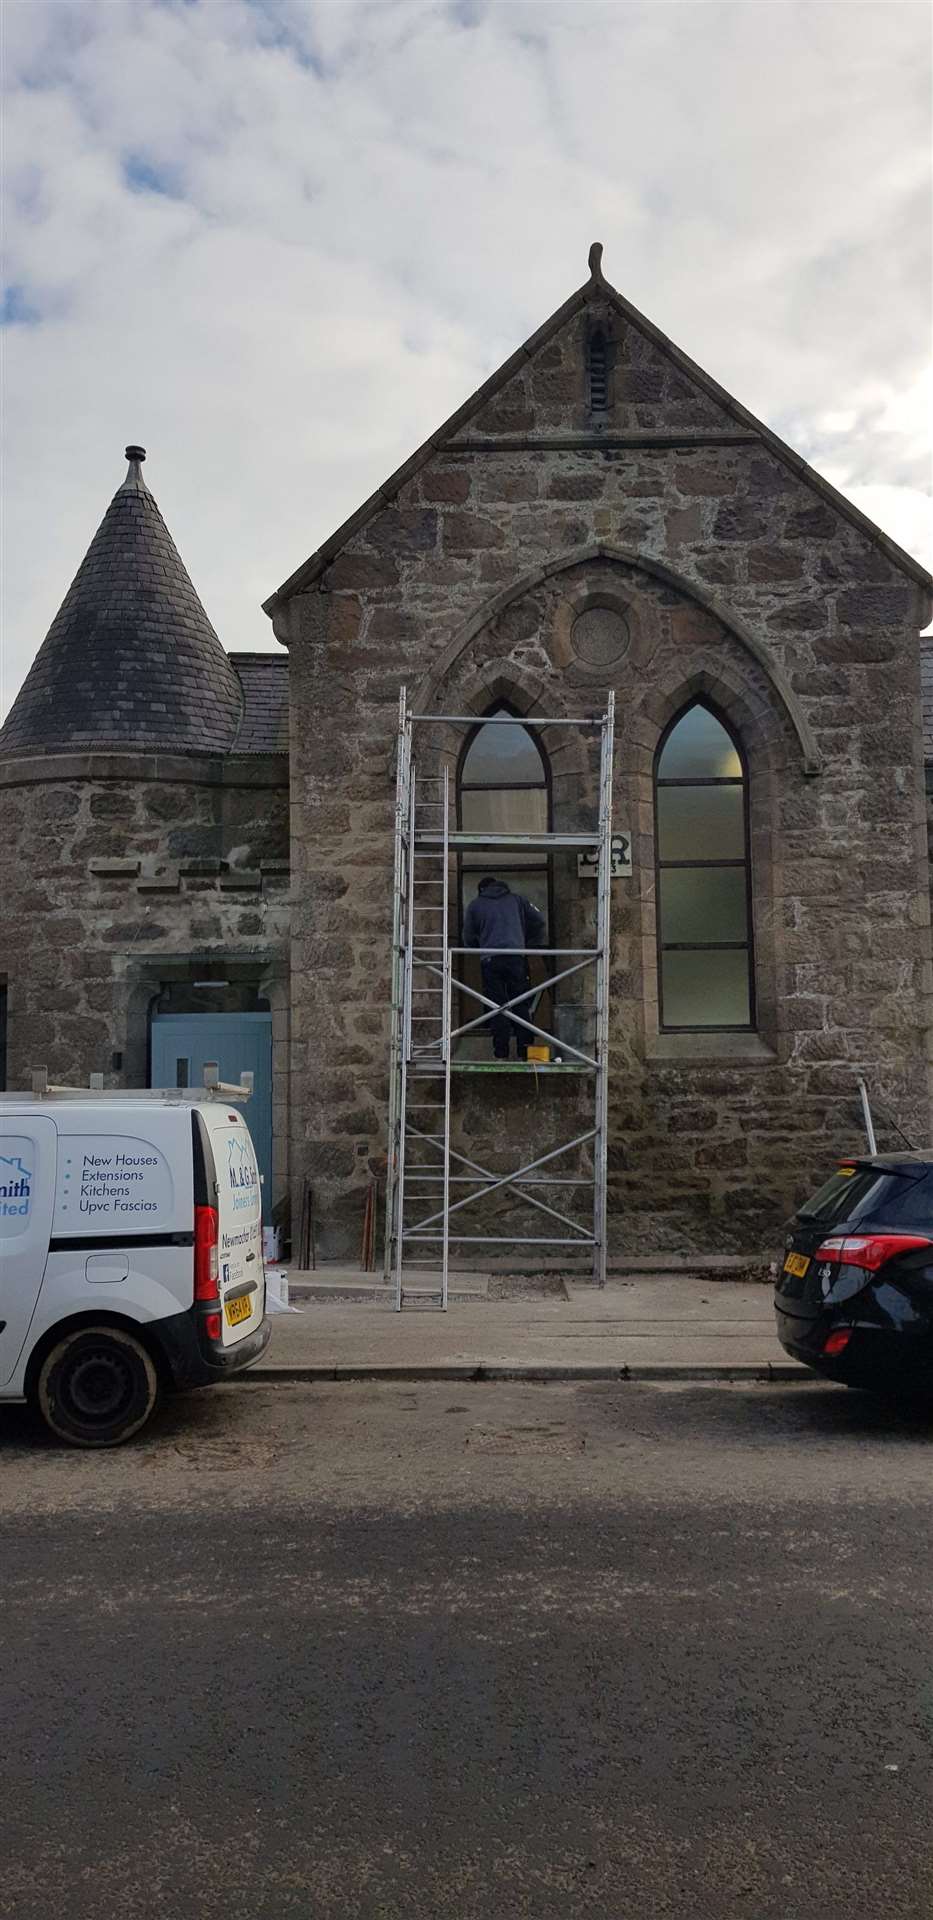 Work has begun on refurbishing the hall's windows.